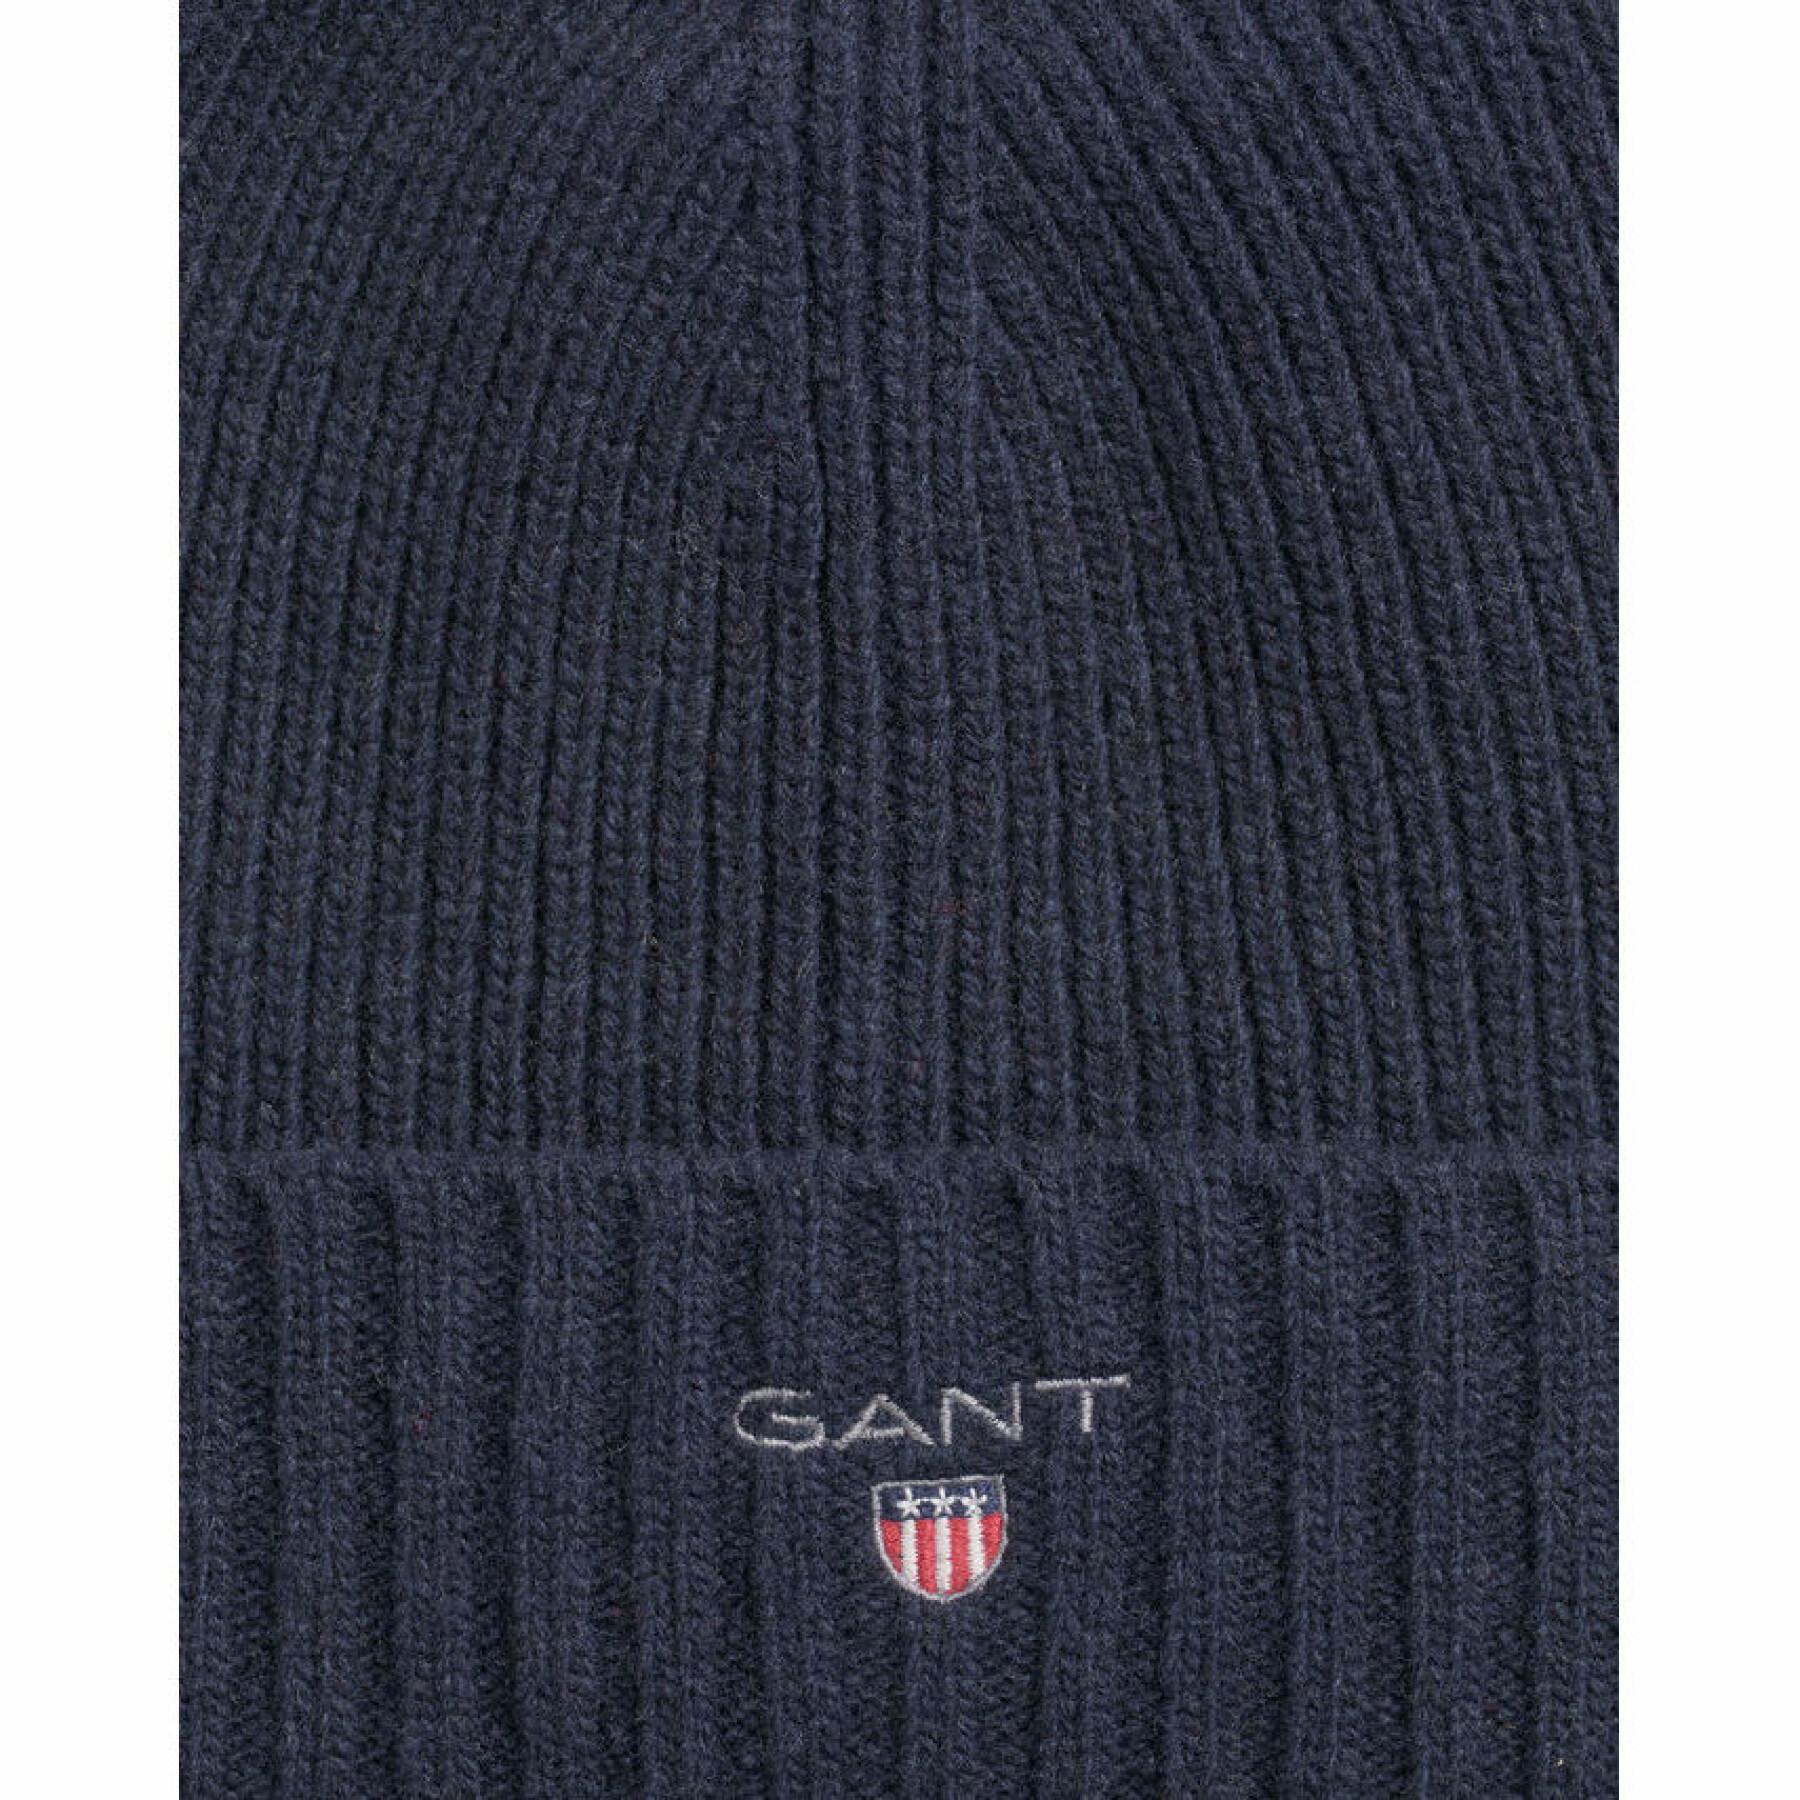 Boné Gant Wool